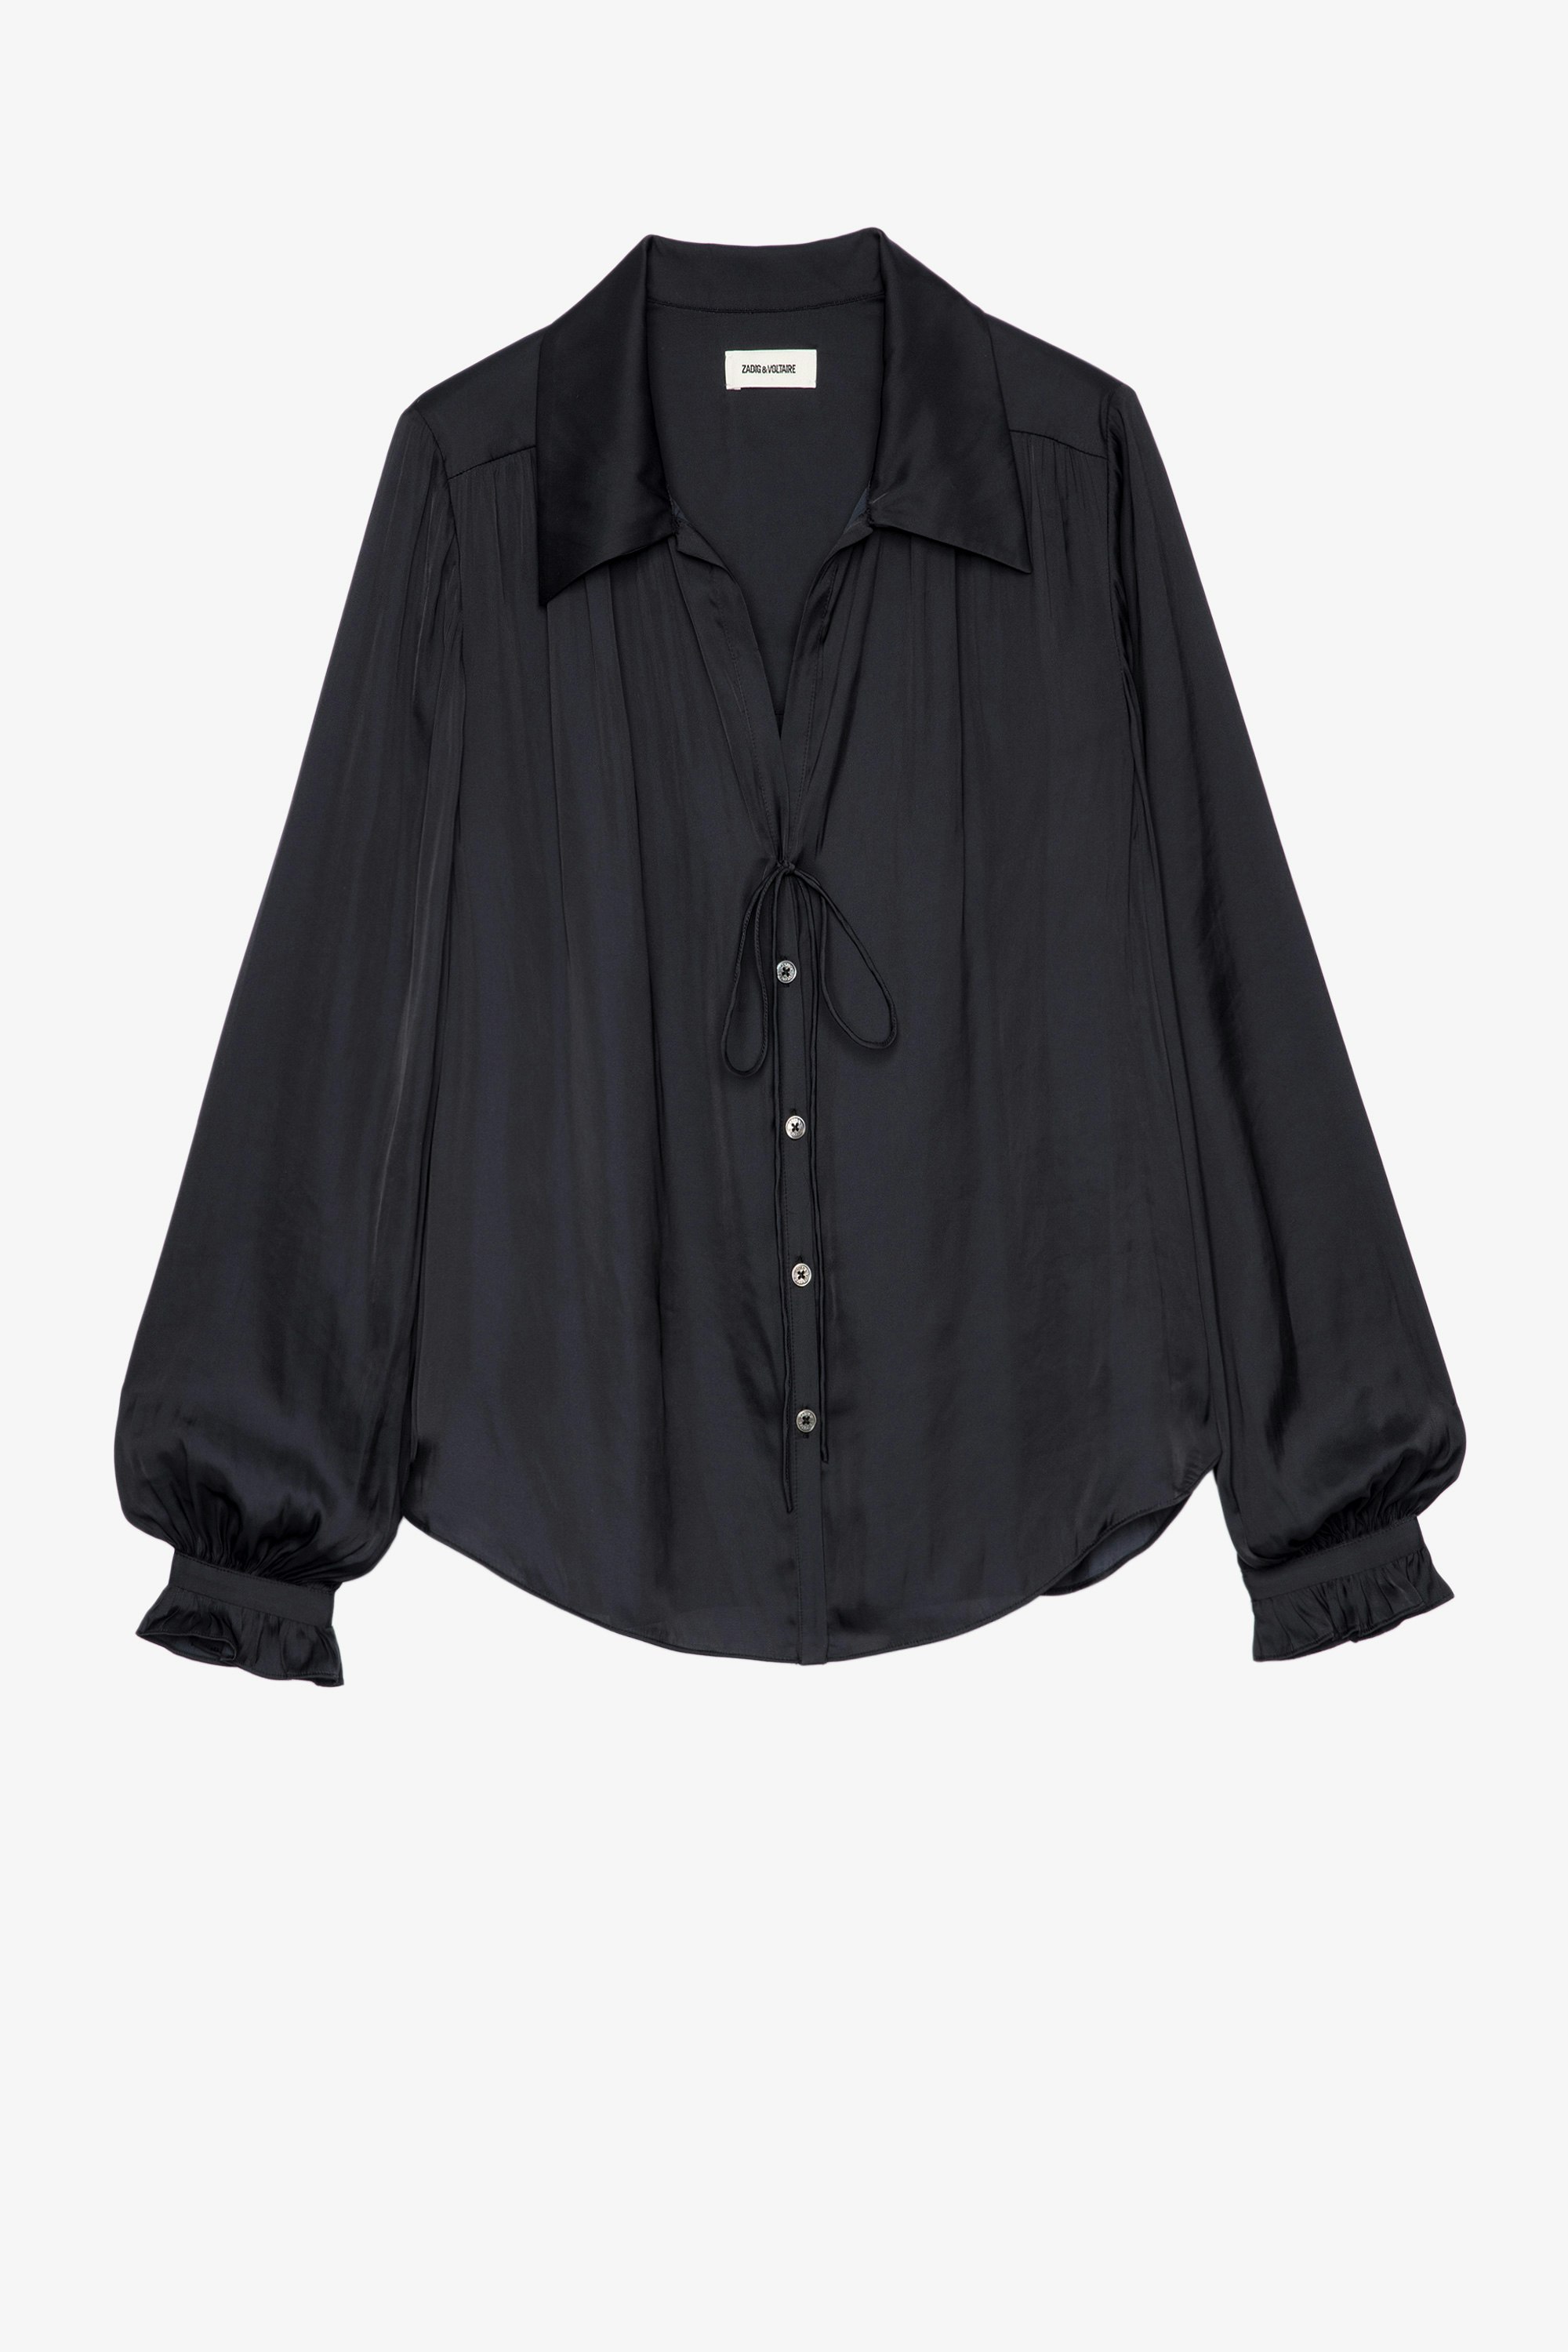 Tilan Satin Shirt - Women's black satin blouse.